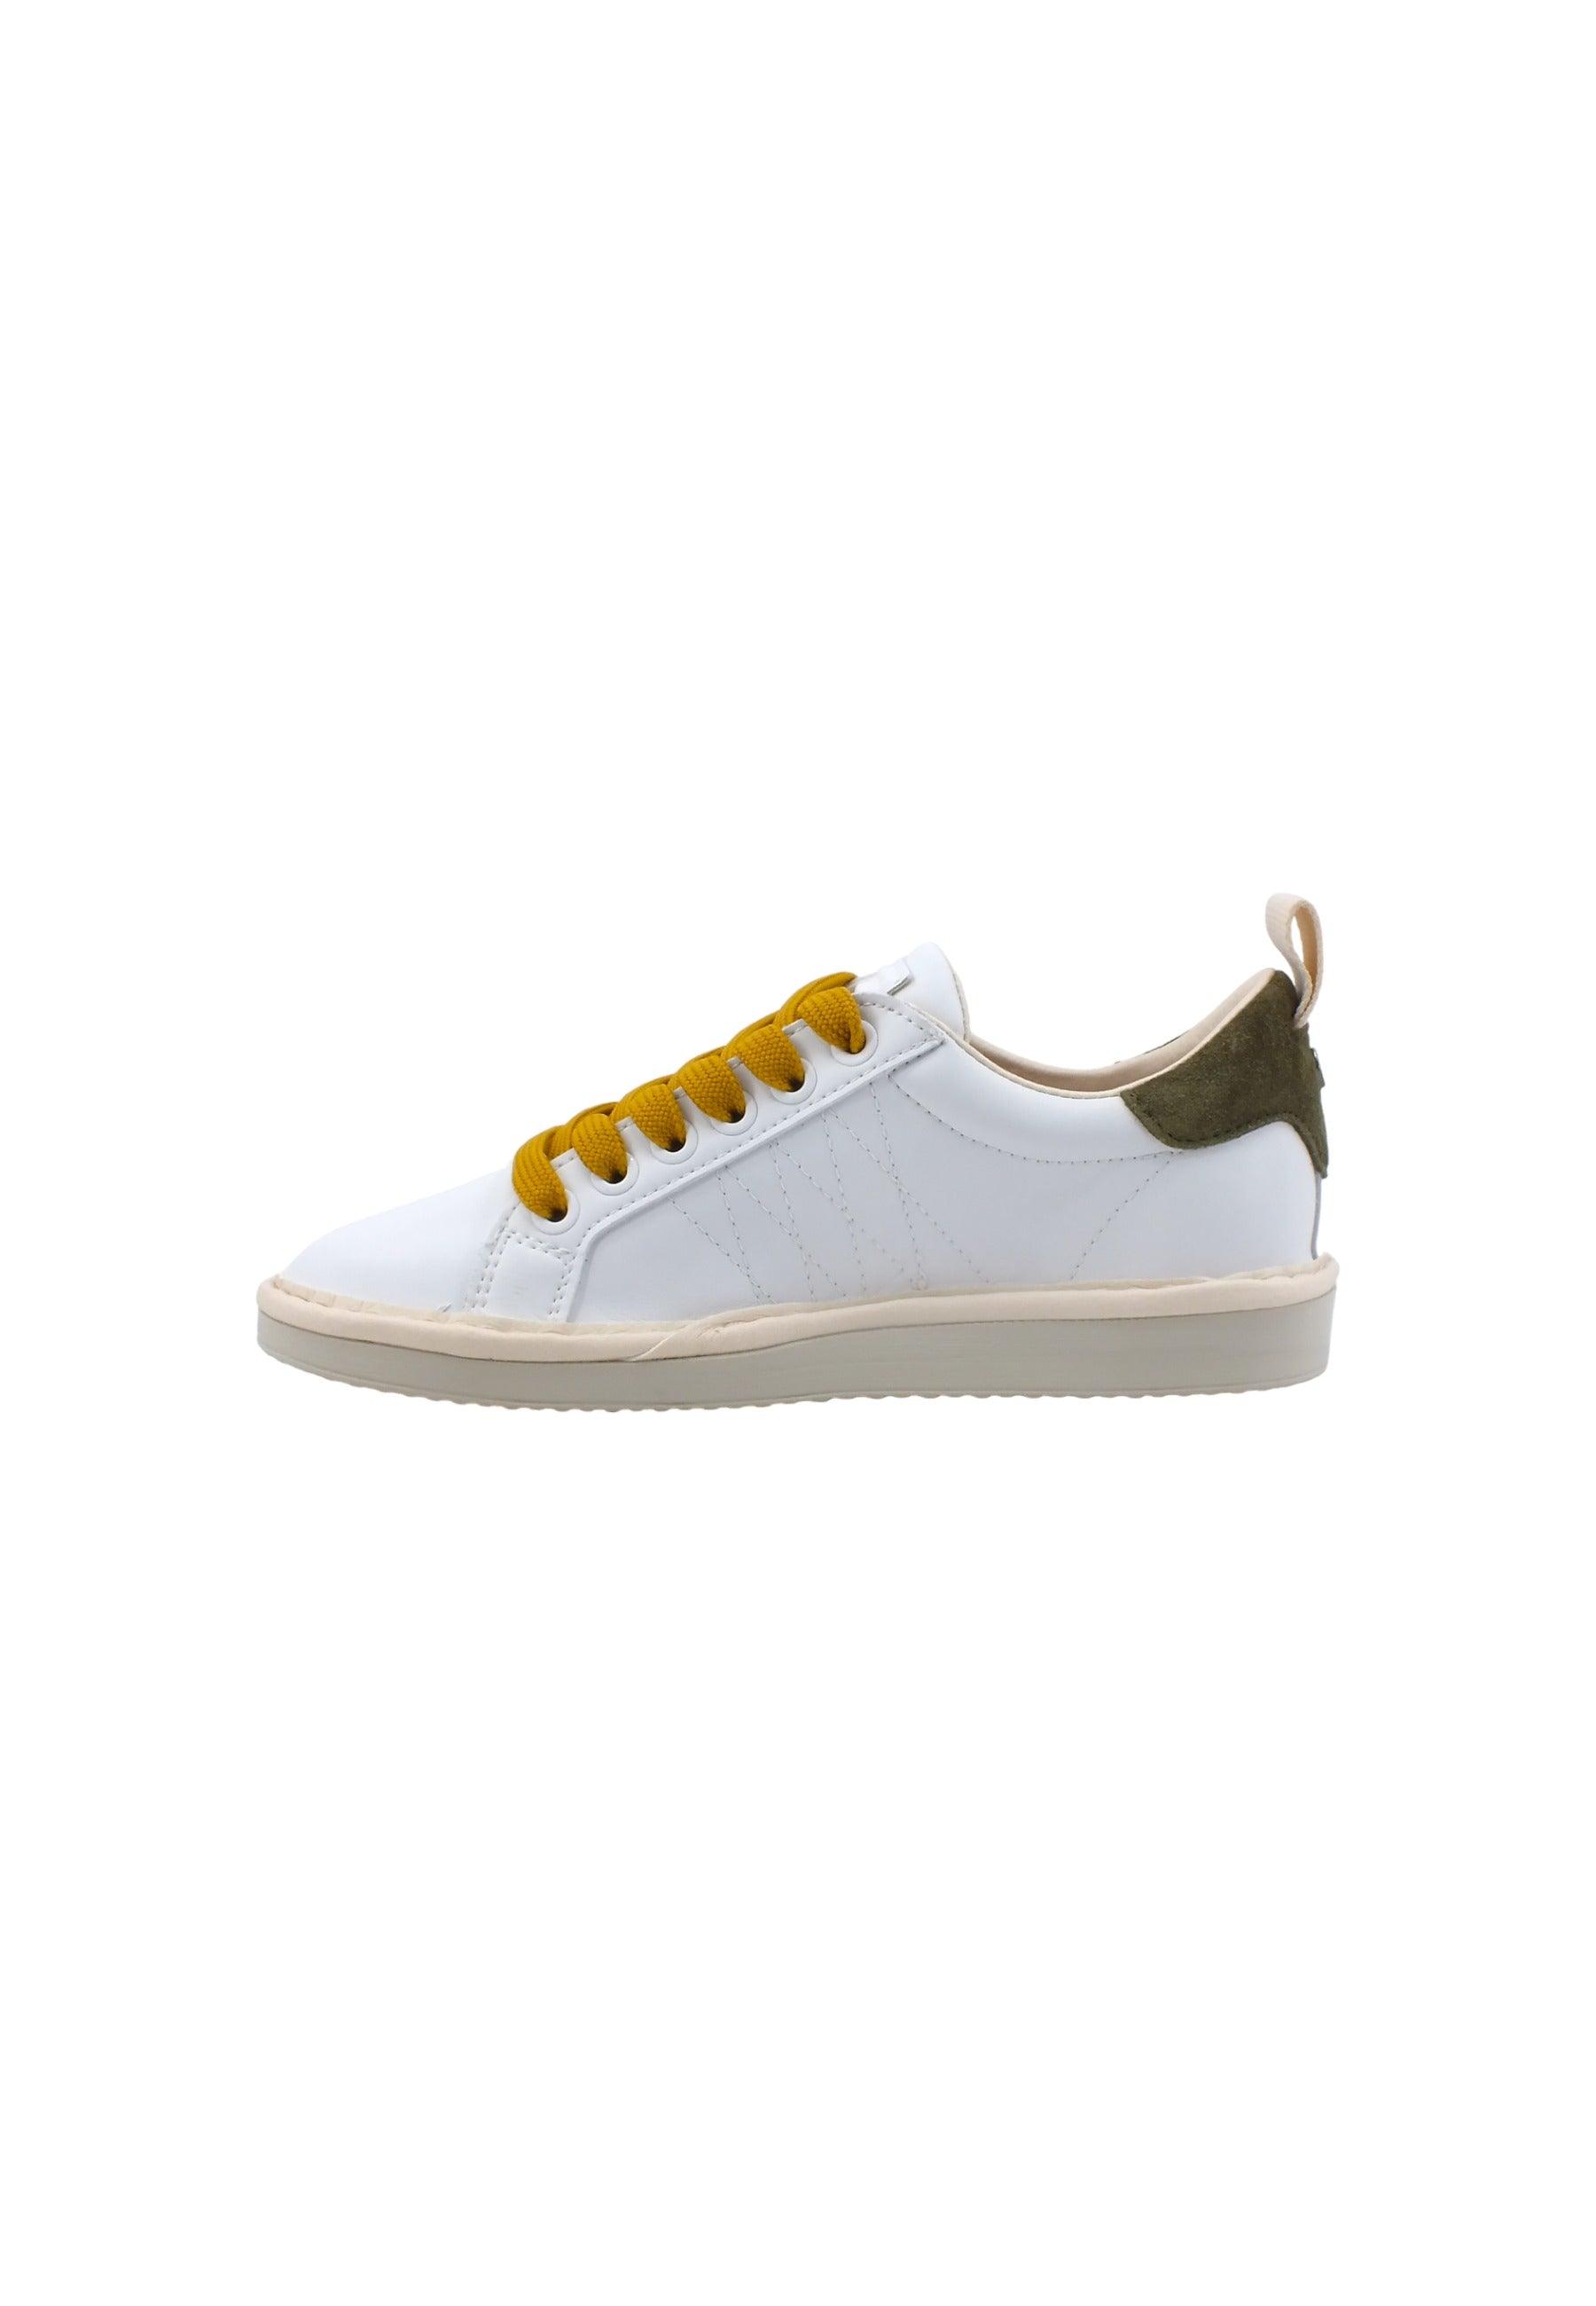 PAN CHIC Sneaker Bambino White Sage YellowP01K00200243004 - Sandrini Calzature e Abbigliamento